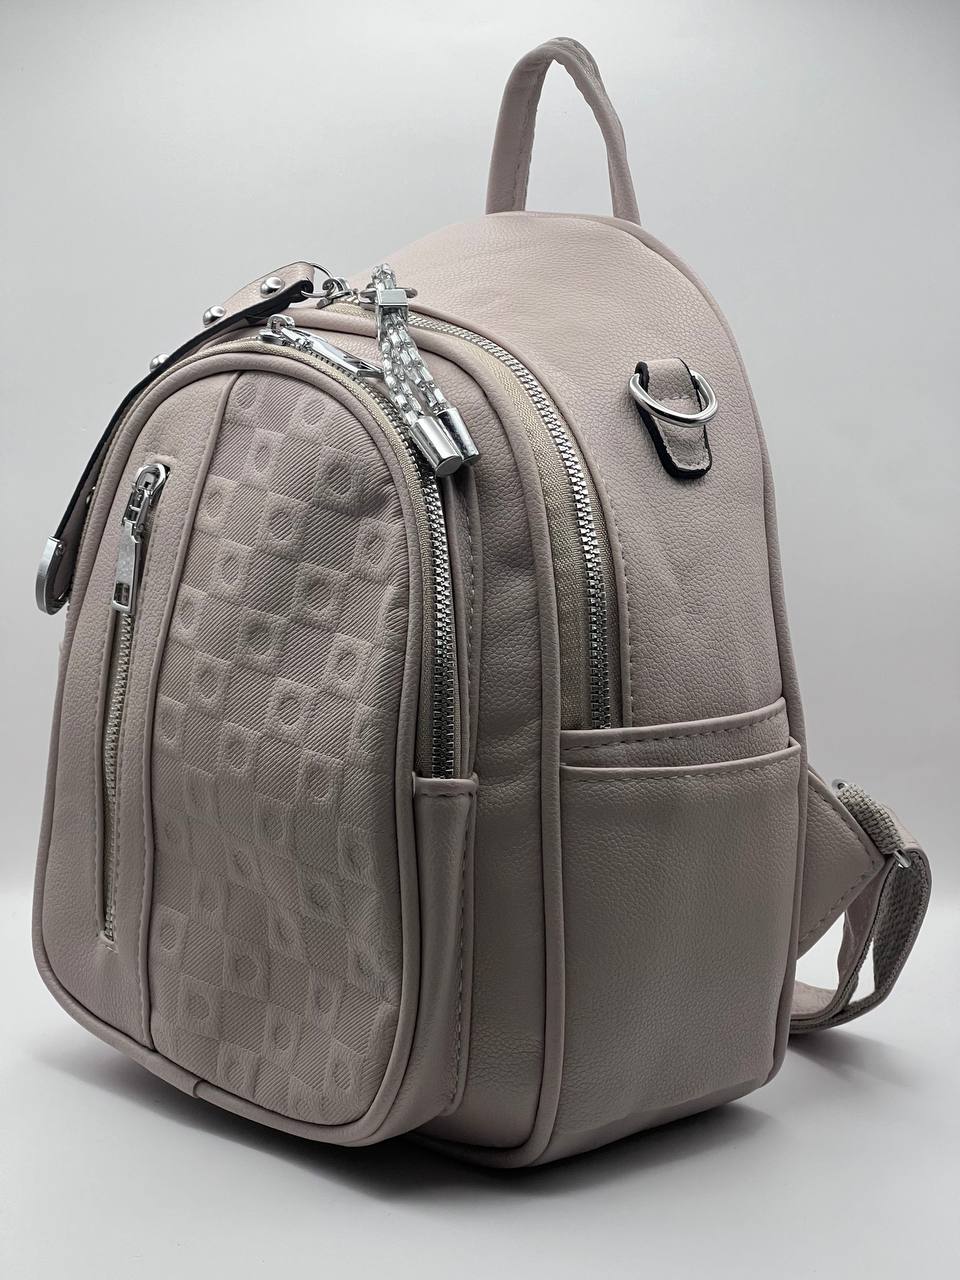 Сумка-рюкзак женская SunGold Р-92001 розовато-серая, 27х22х12 см